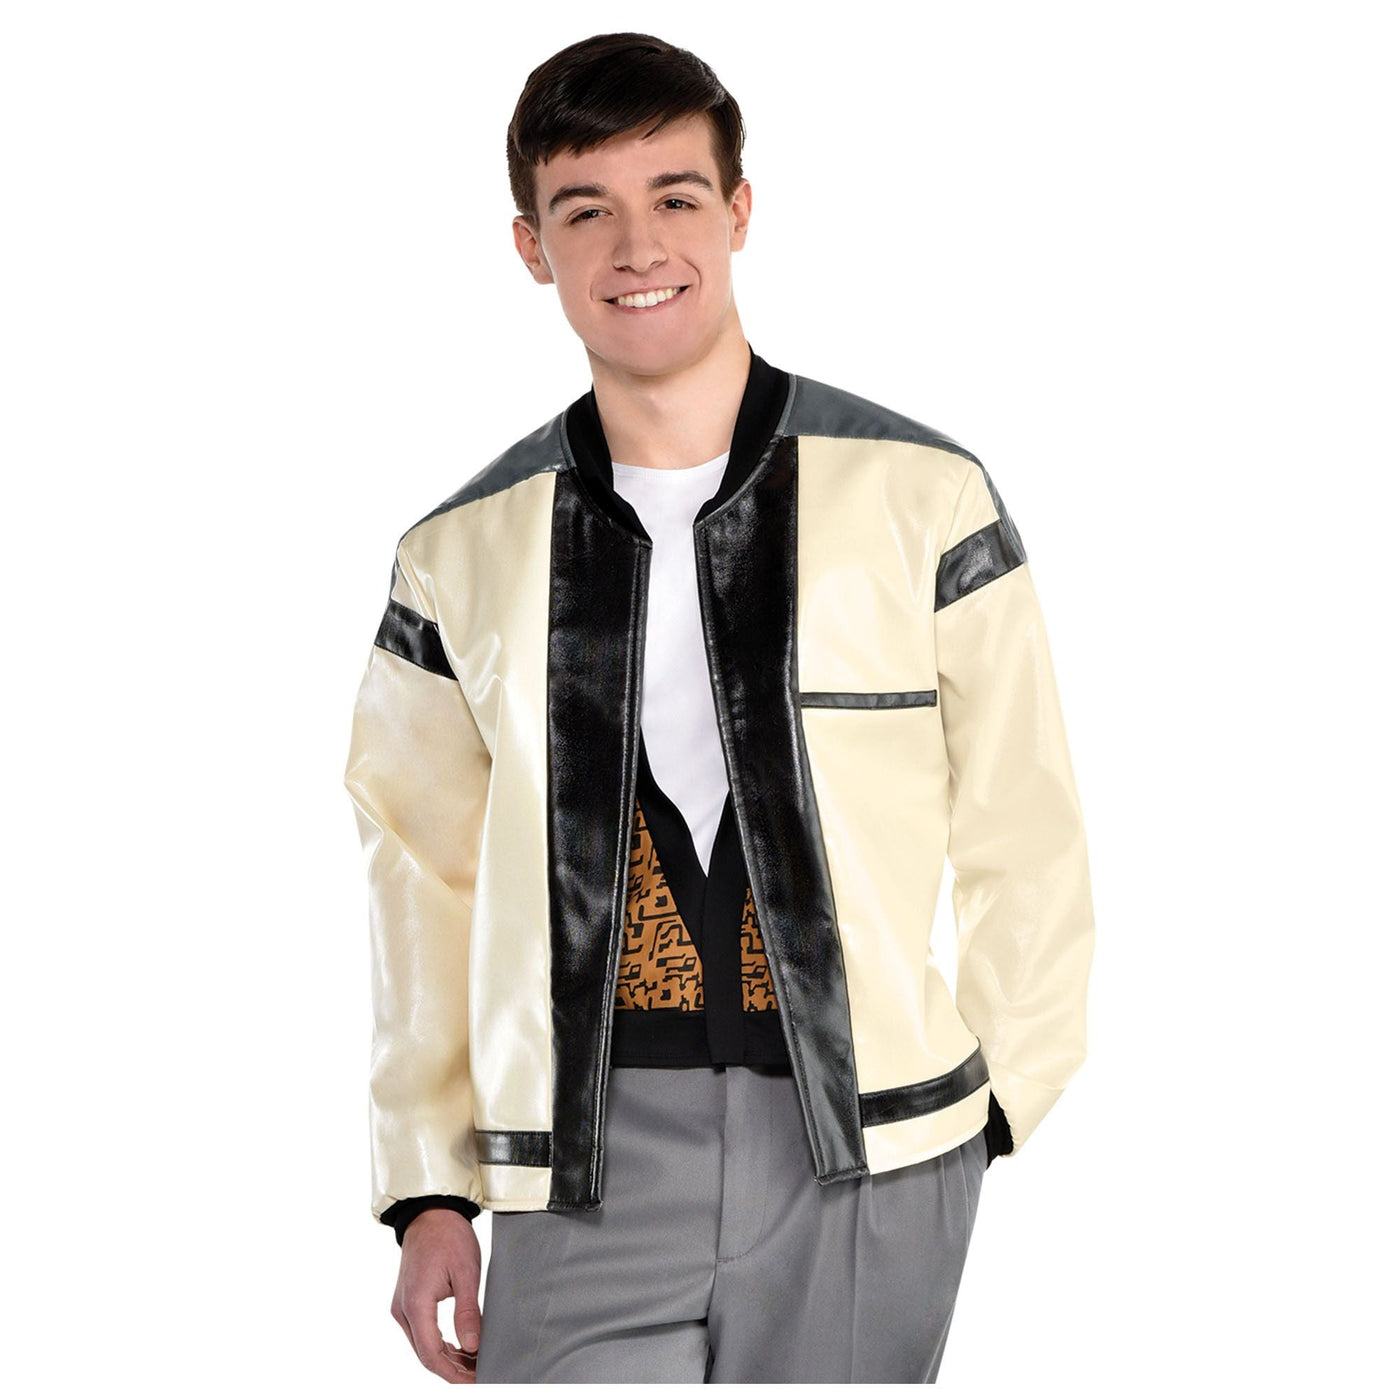 Ferris Bueller Jacket with Vest Kit - Men Standard - JJ's Party House